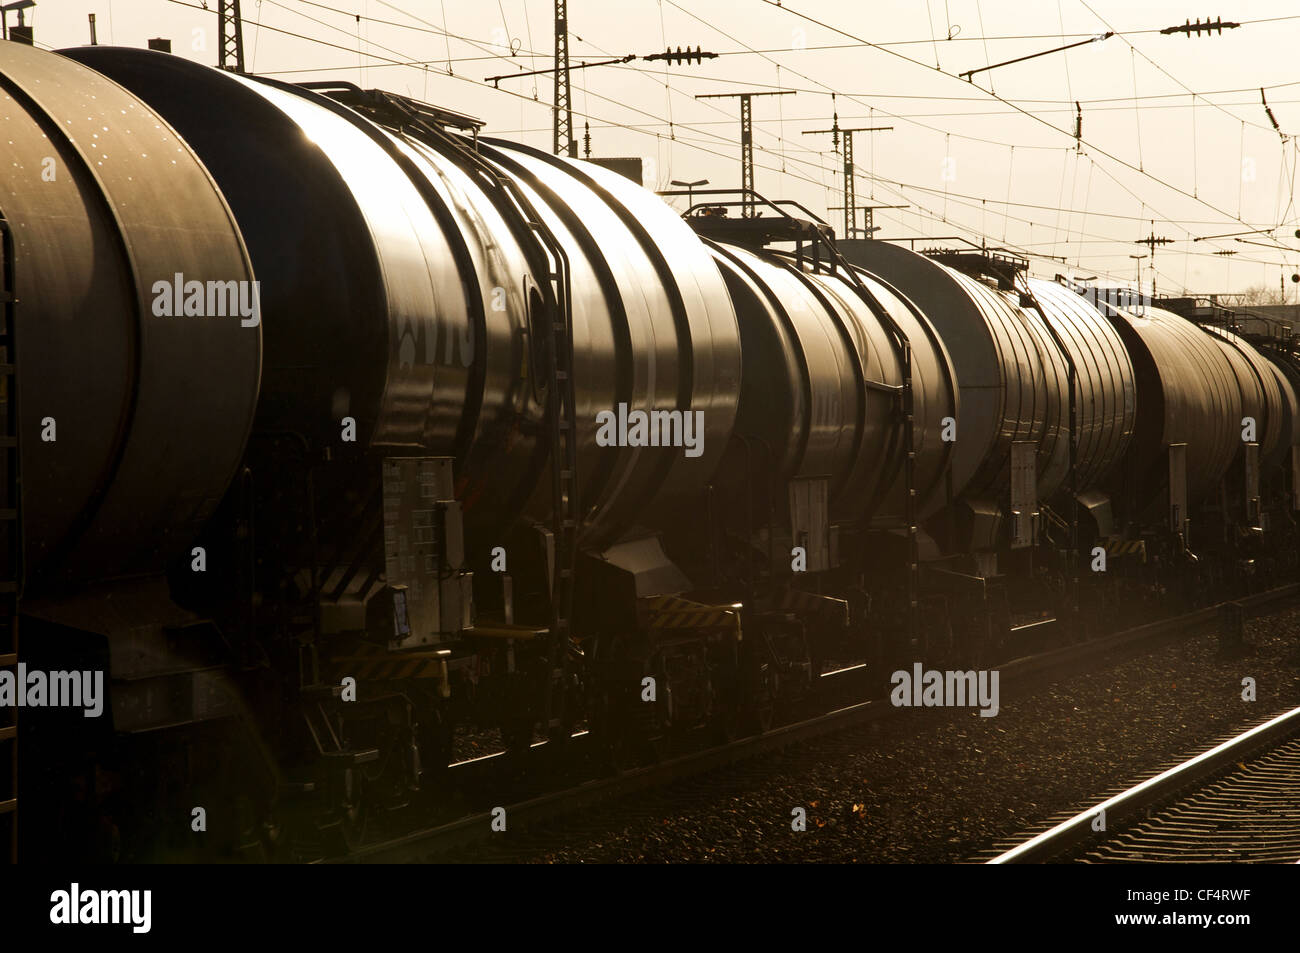 Railway oil tankers Stock Photo